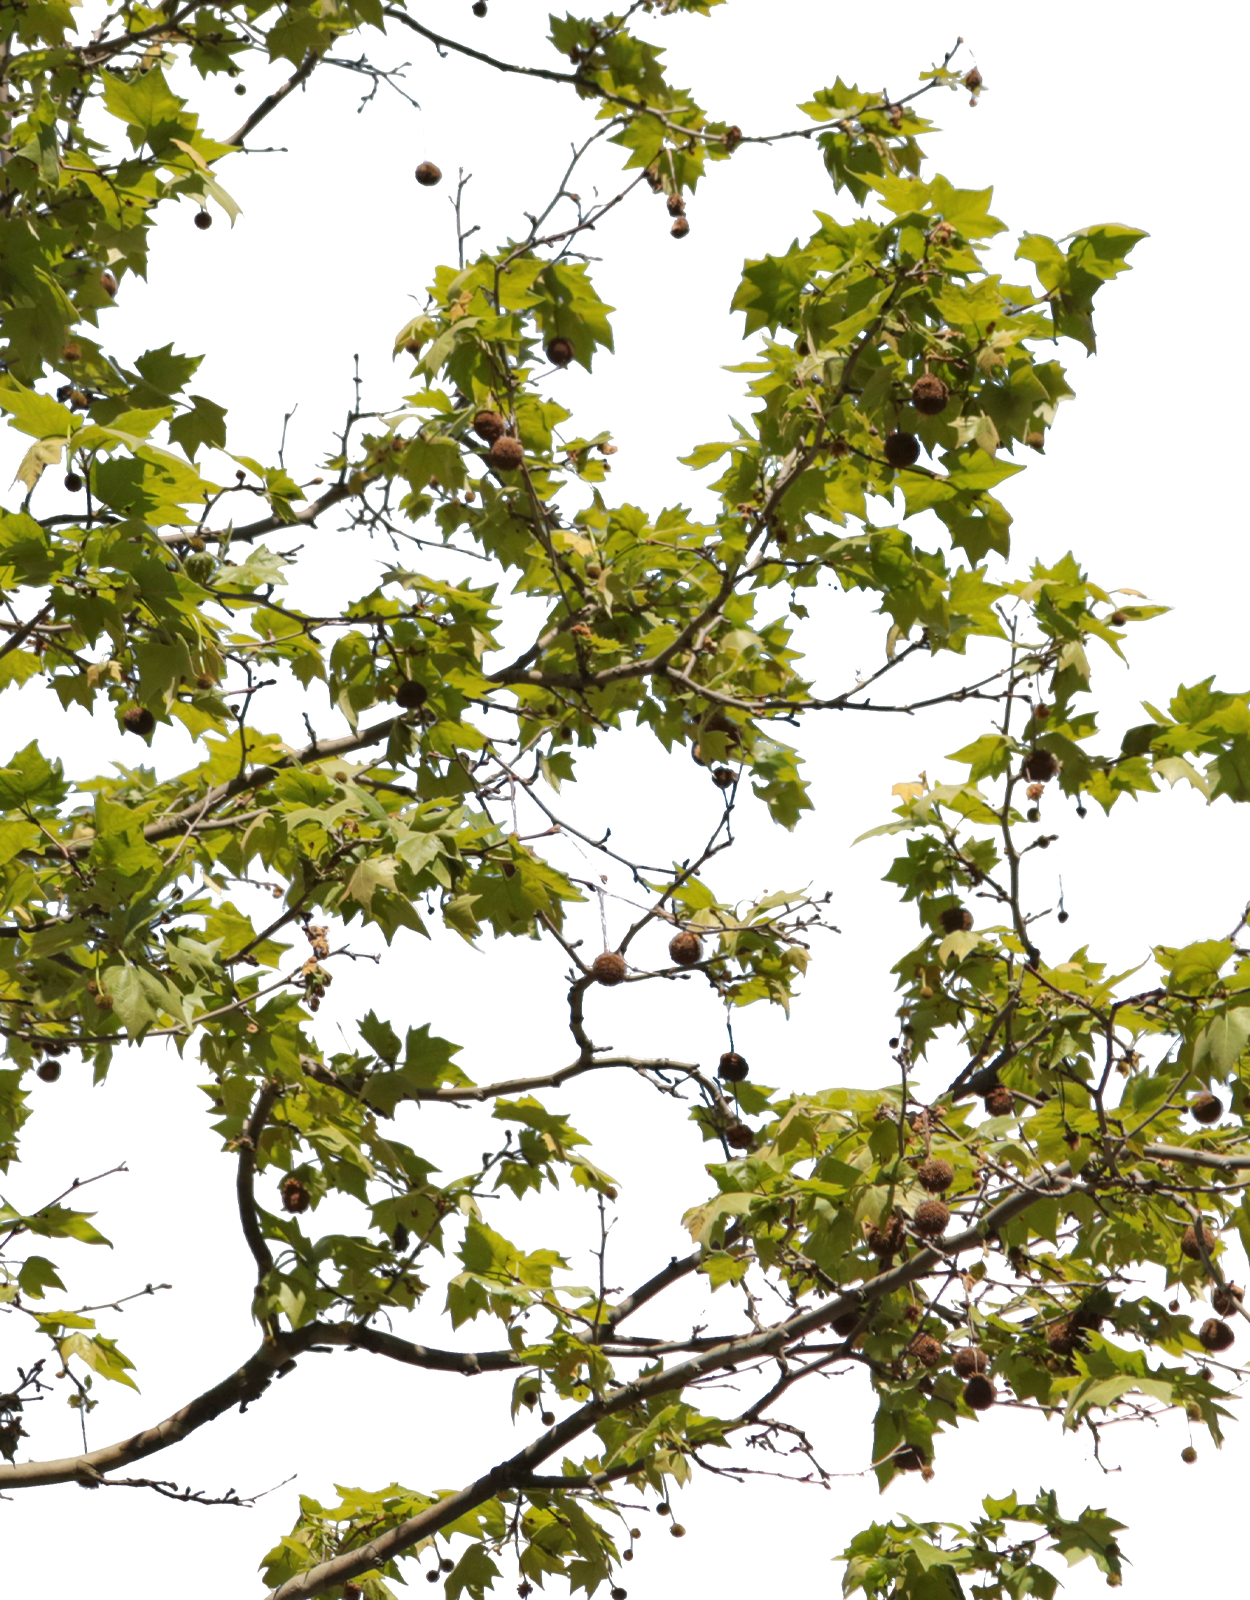 Platanus acerifolia m04 - cutout trees